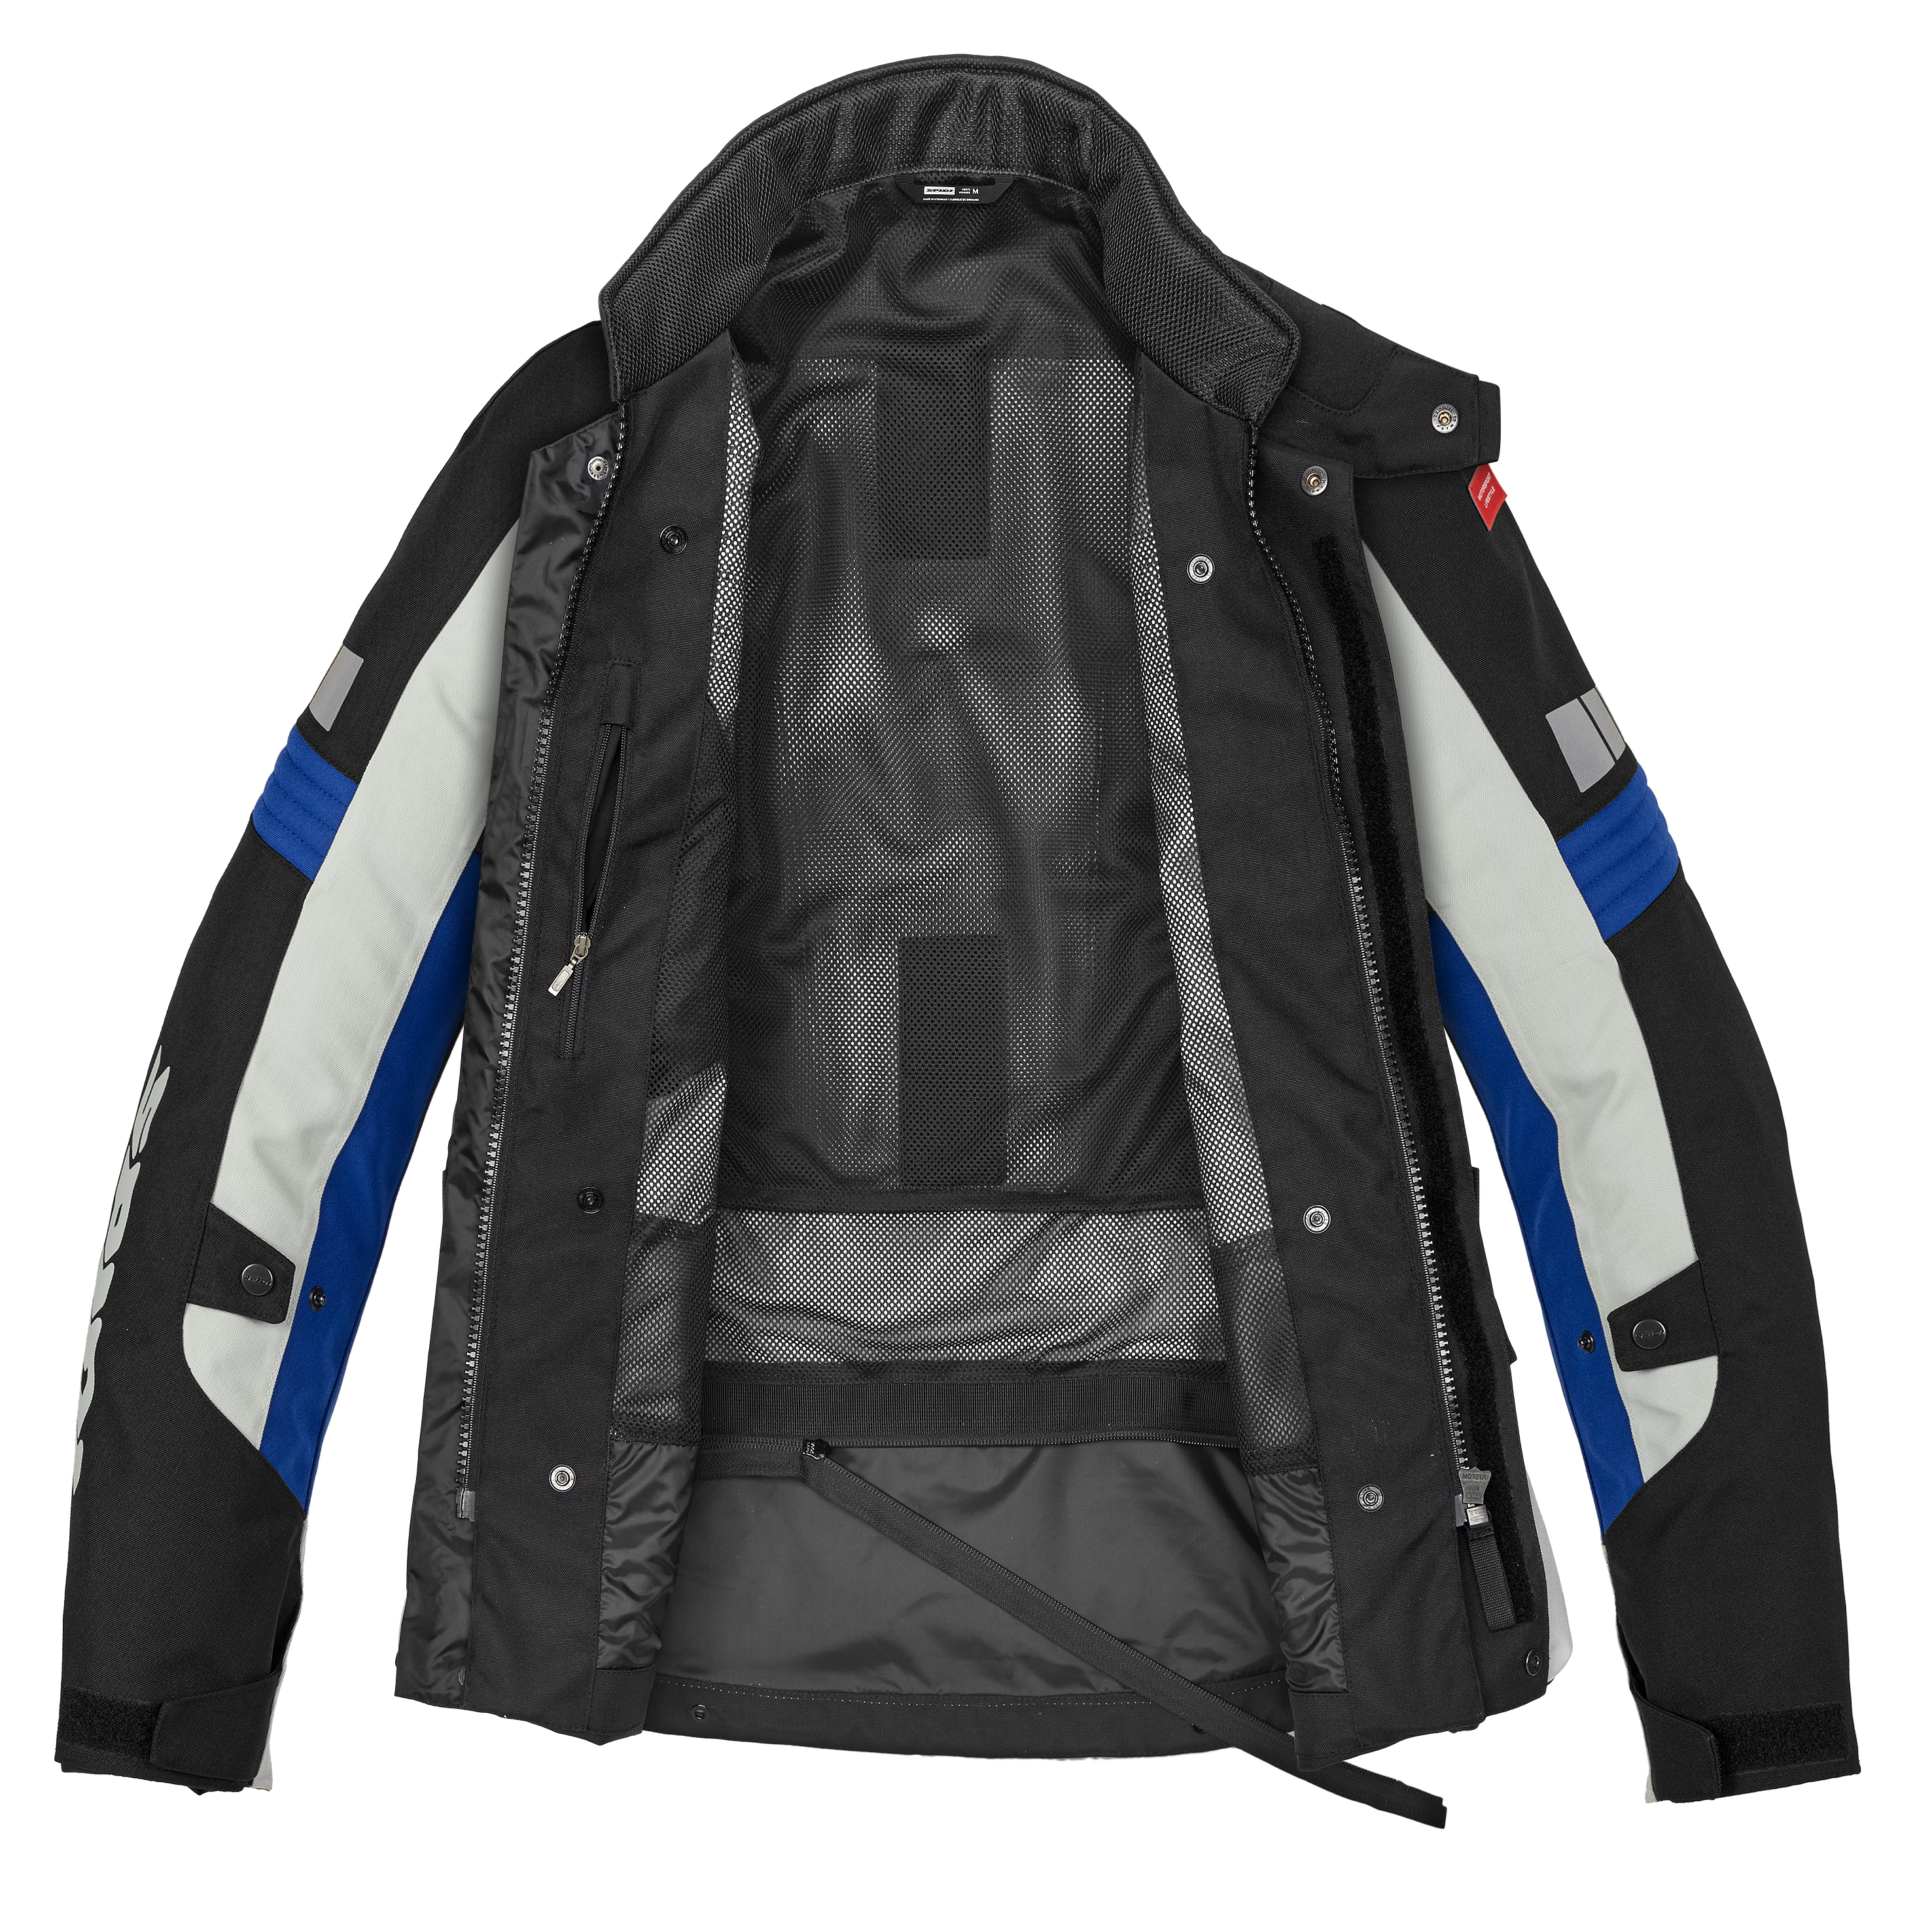 Spidi H2Out Outlander Men's Textile Motorcycle Jacket